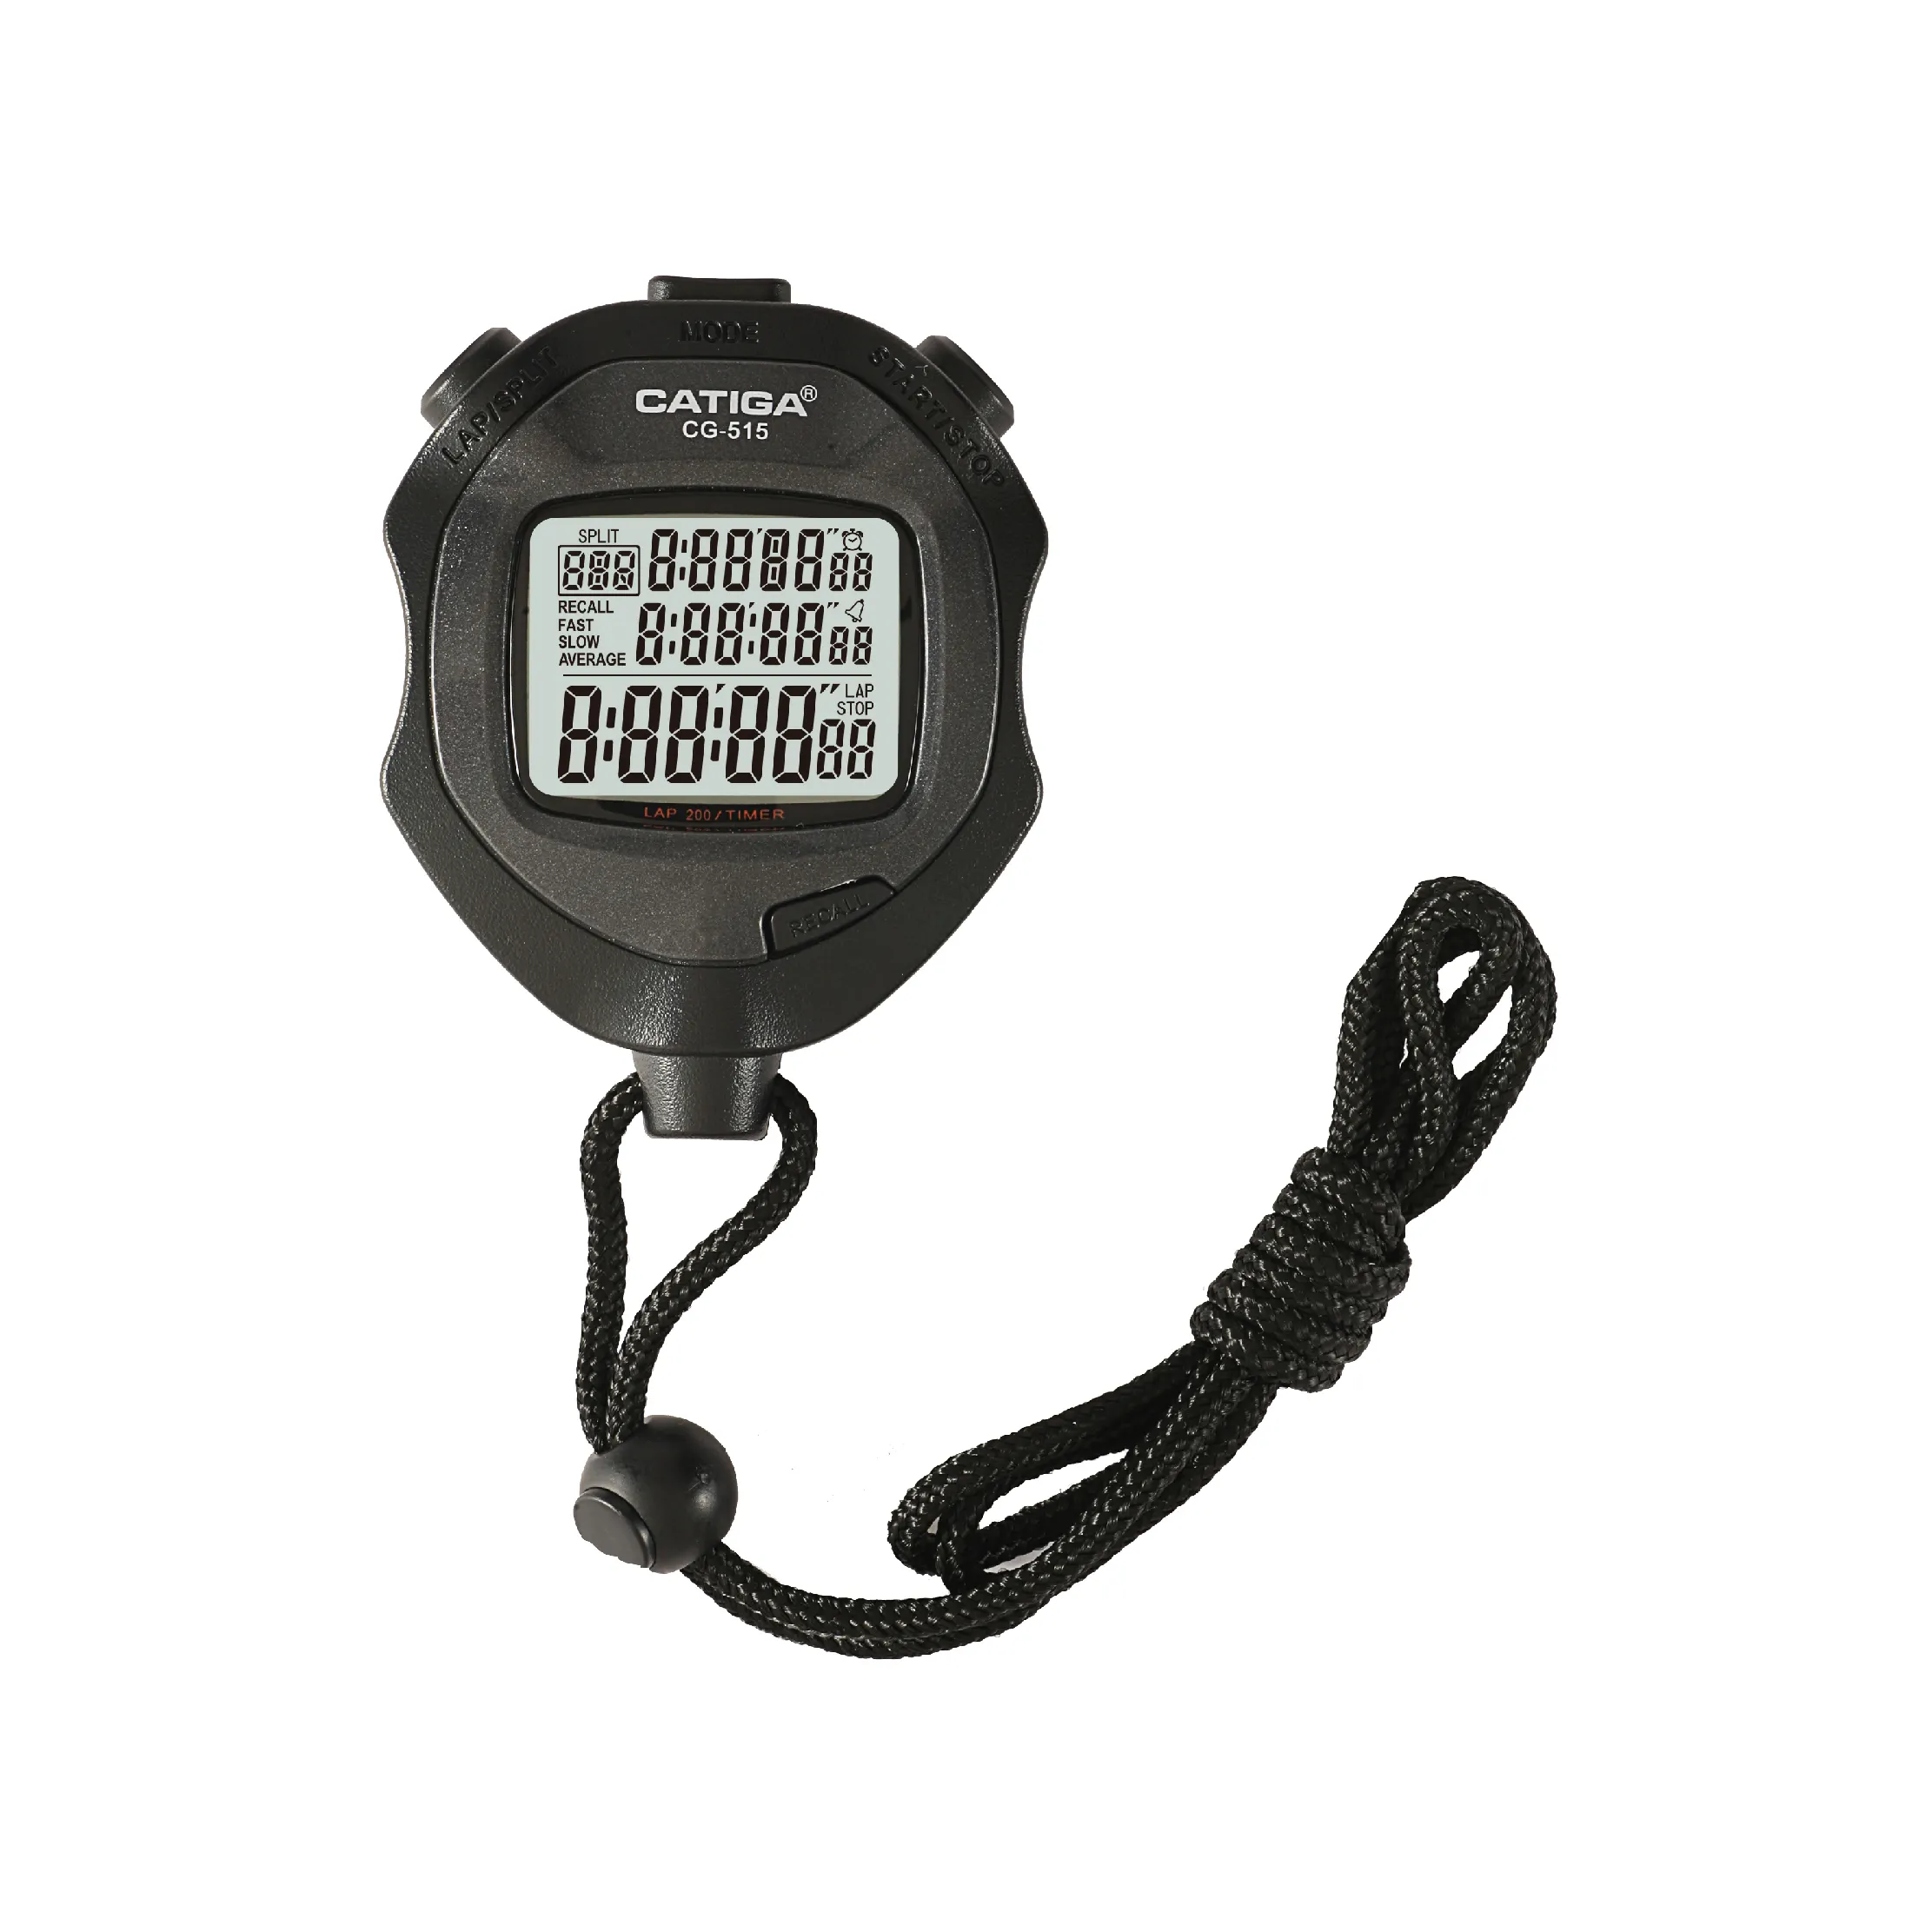 CATIGA 3 lines display professional Digital Sport Stopwatch 200 dual split recallable memory stopwatch